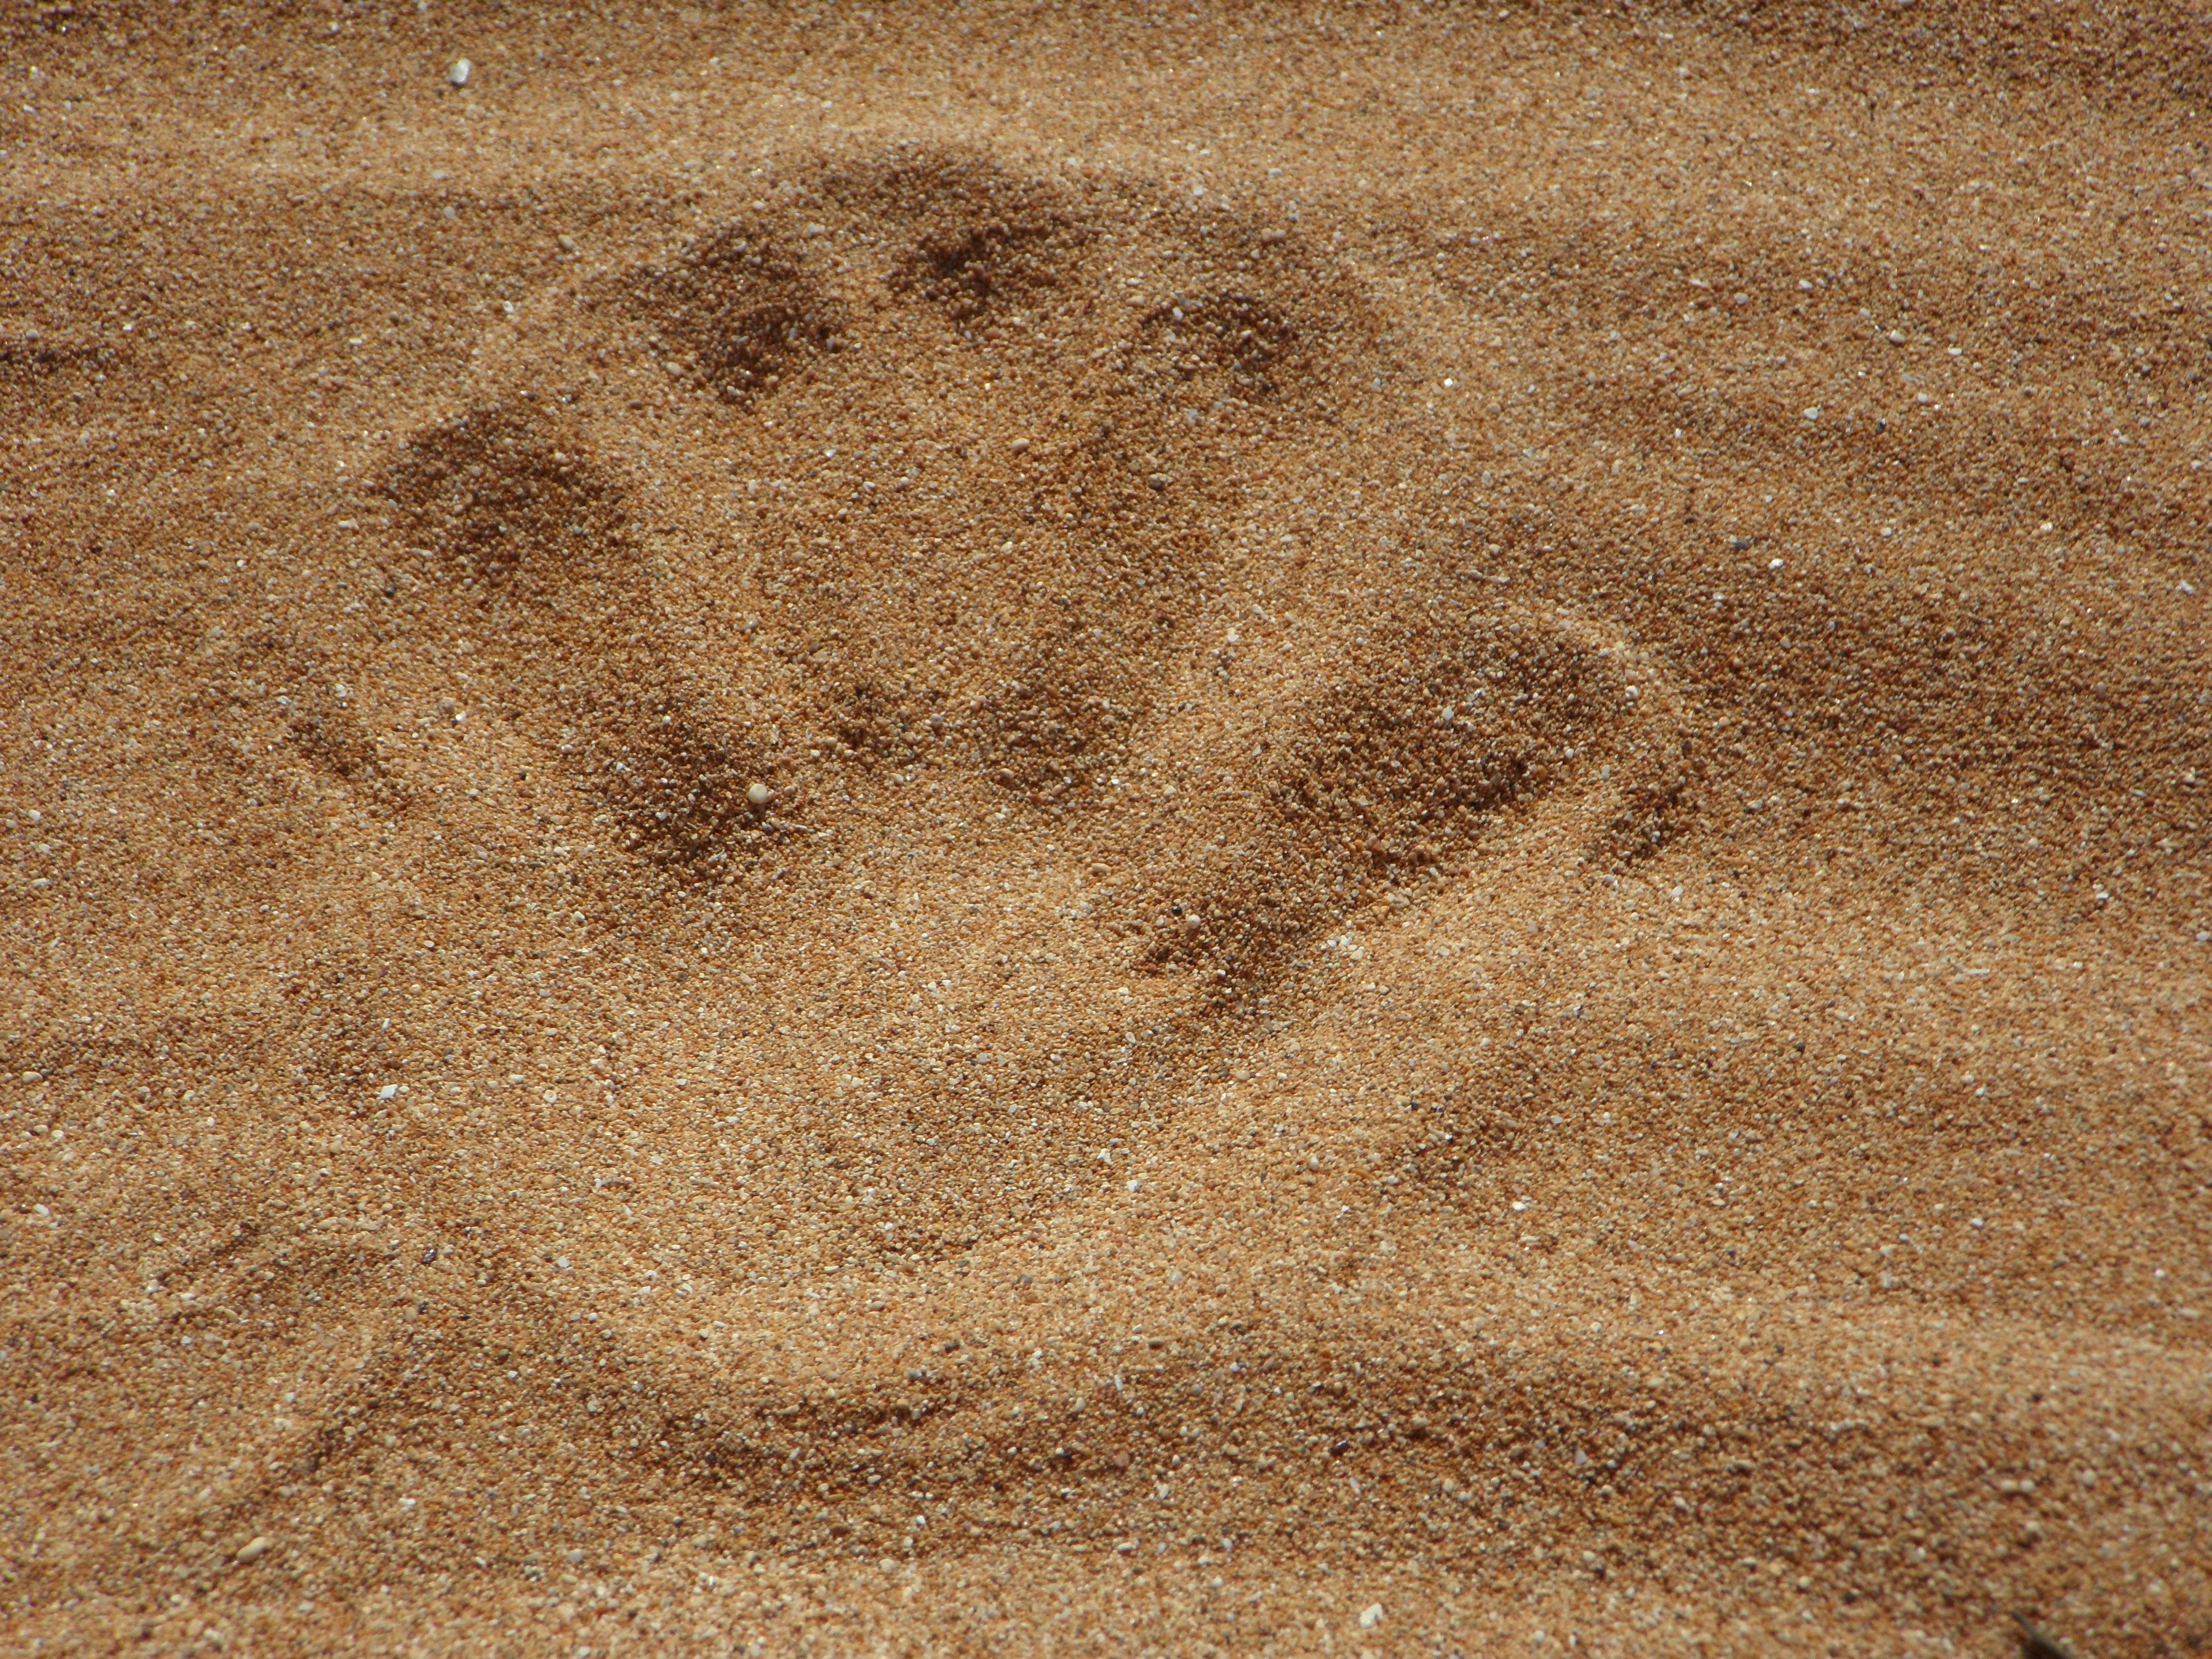 pressed palm on sand